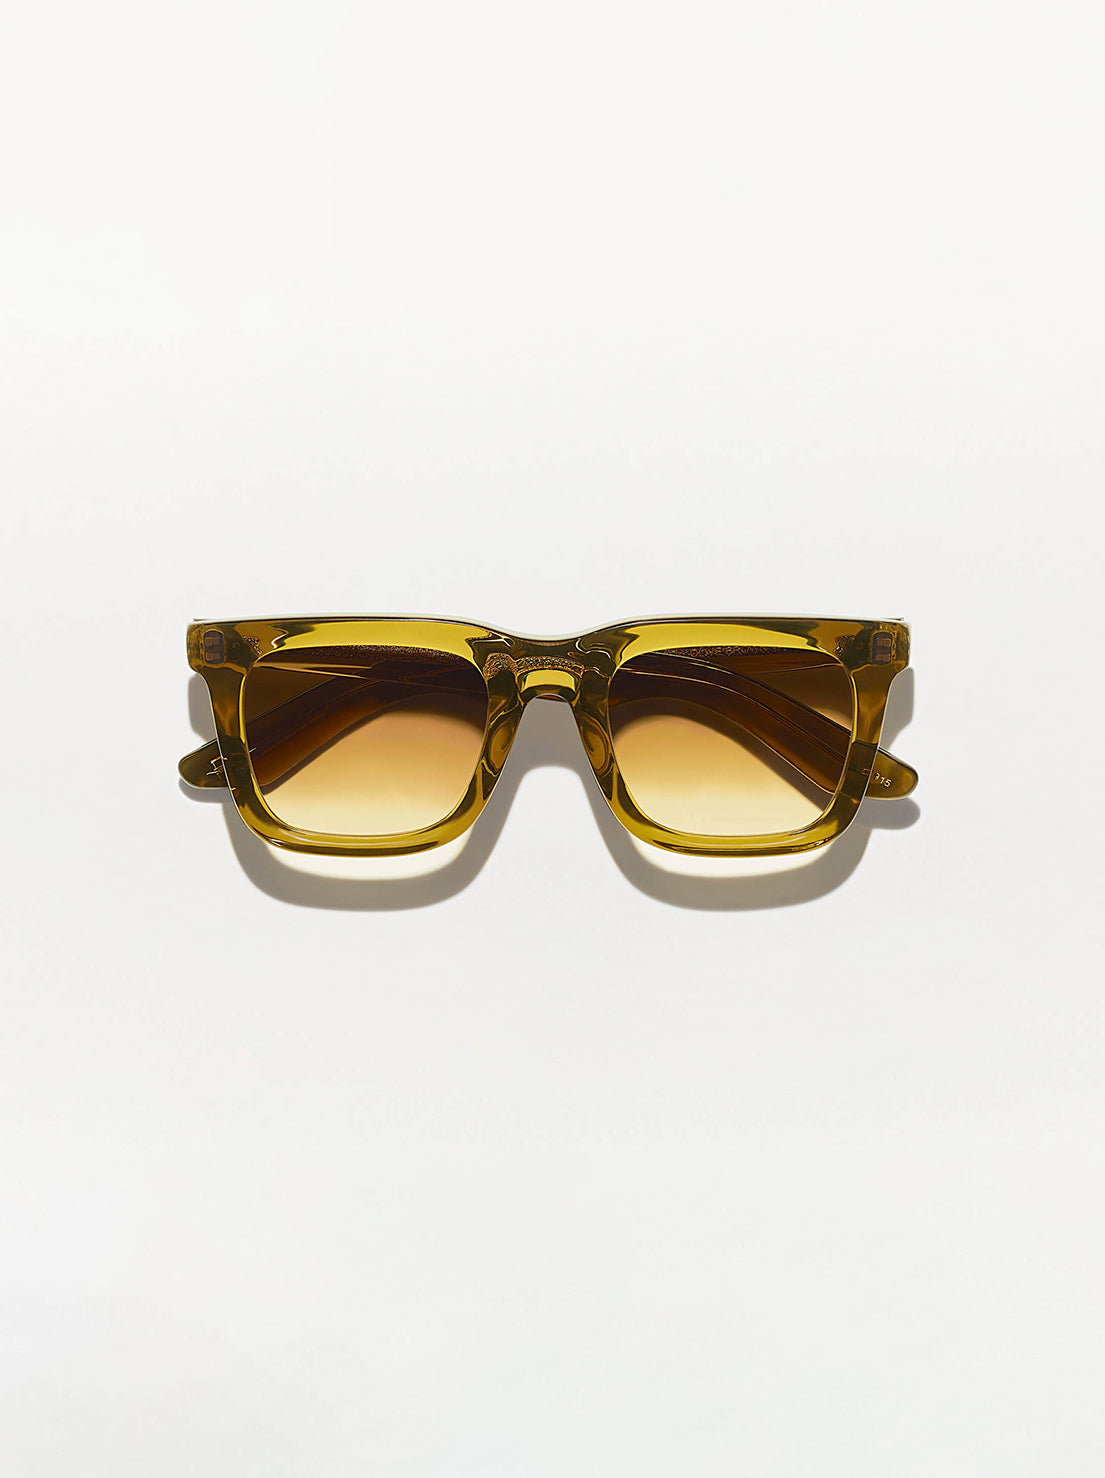 Moscot - Rizik Sunglasses in Olive Brown 49 (Reg) - Chestnut Fade Lens